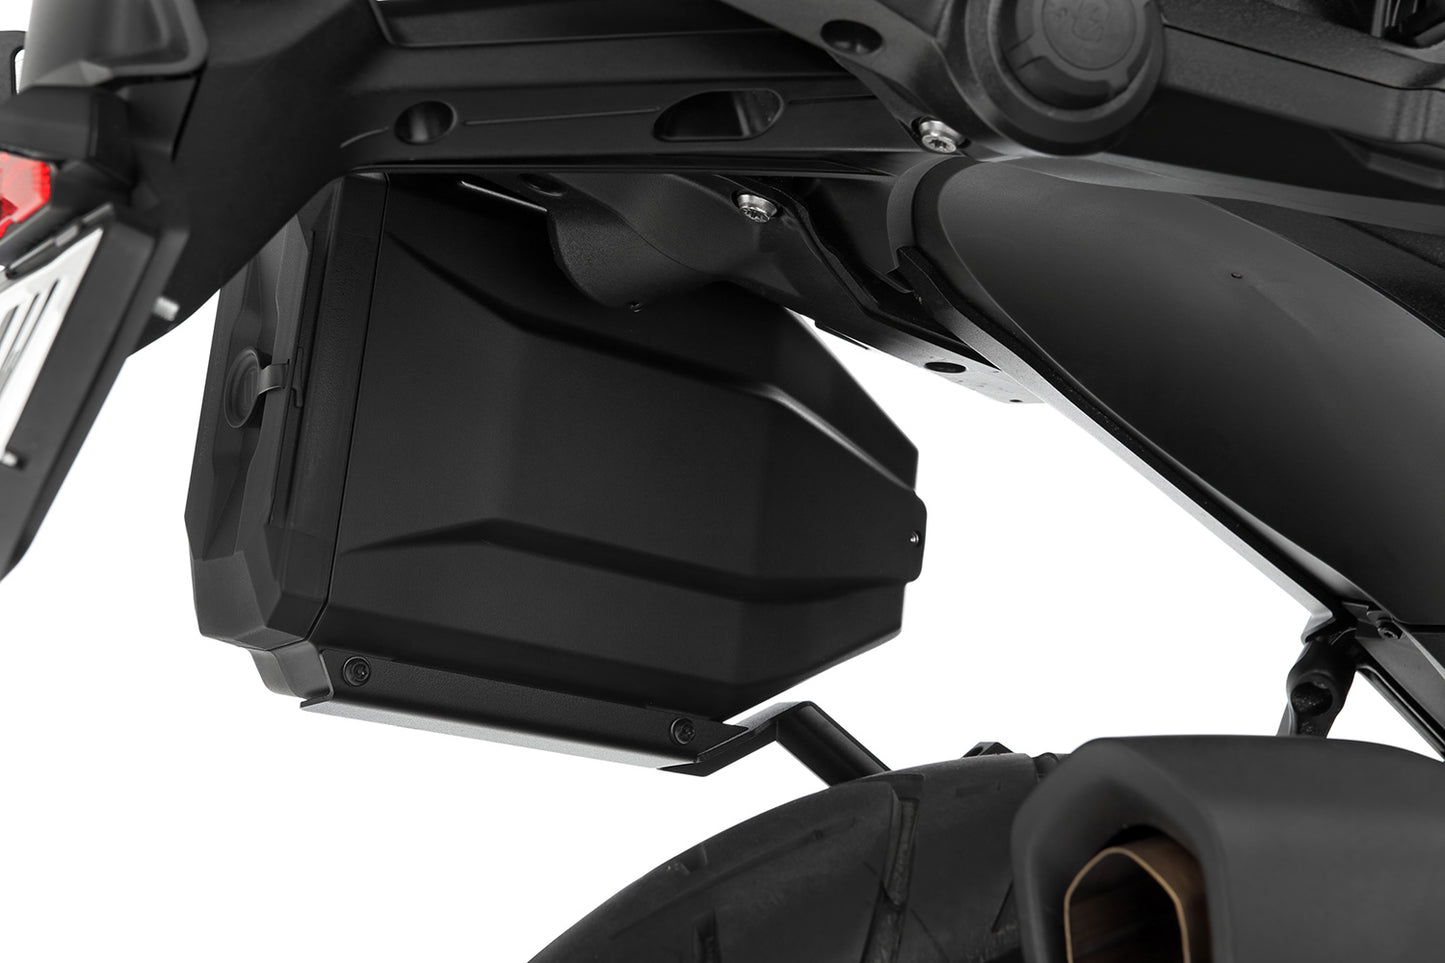 Wunderlich tool box for models with Vario case mounts - black - For original BMW keys